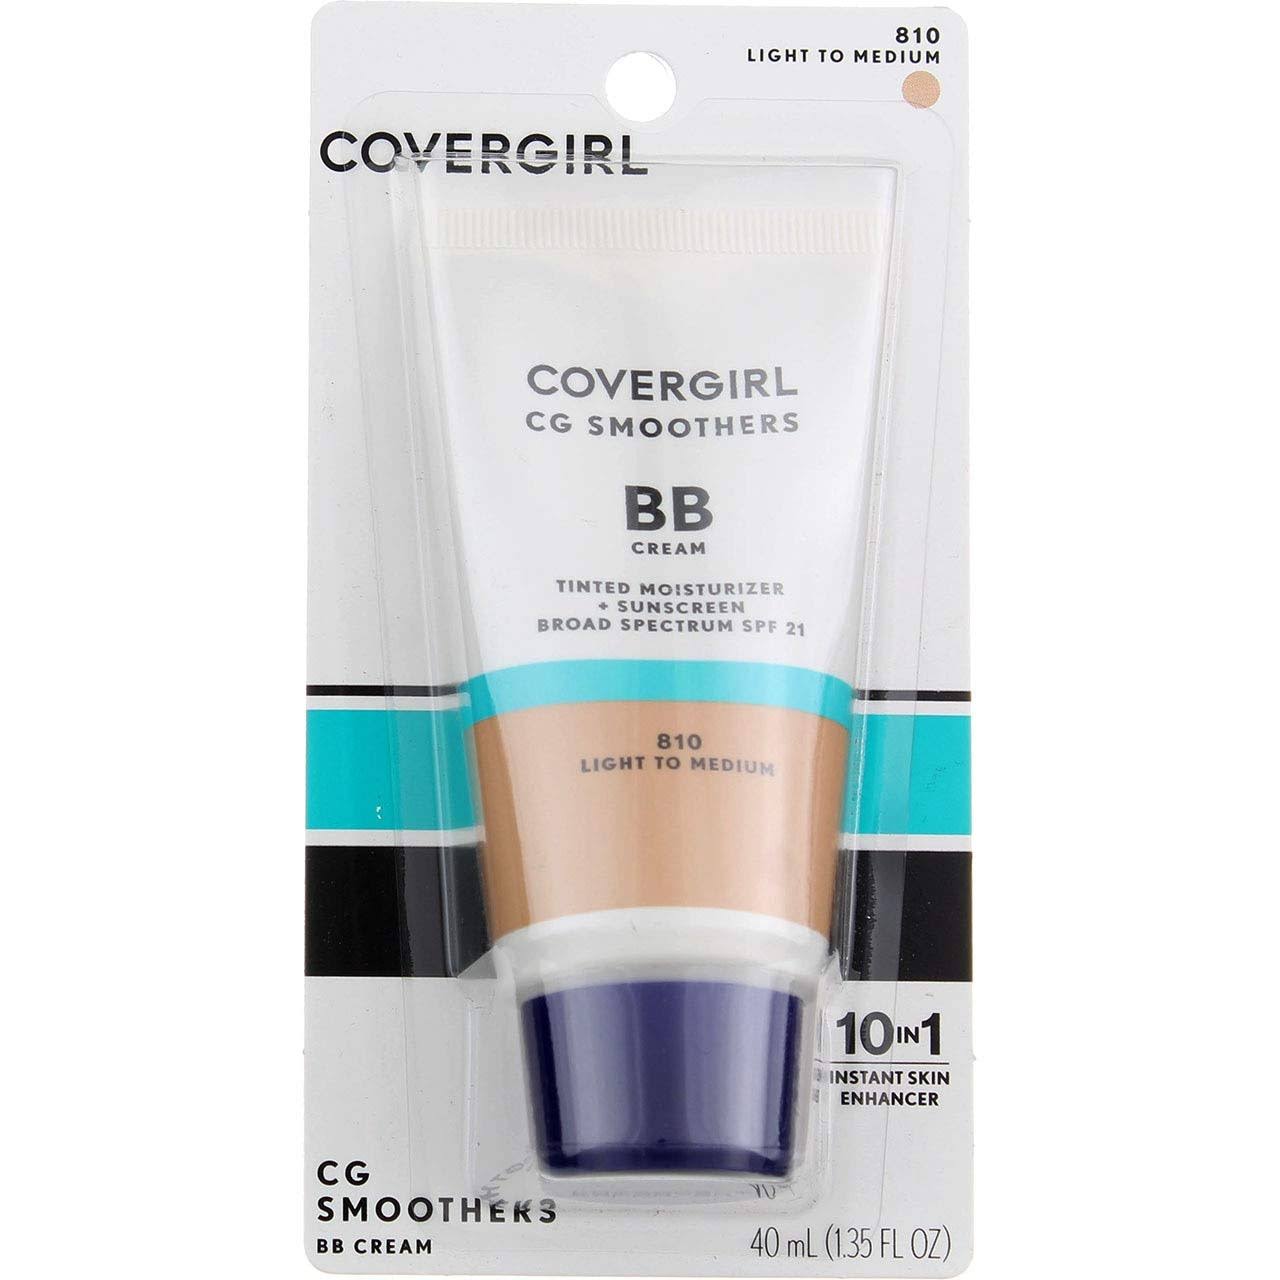 Covergirl Smoother Bb Cream - 810 Light To Medium, 40ml